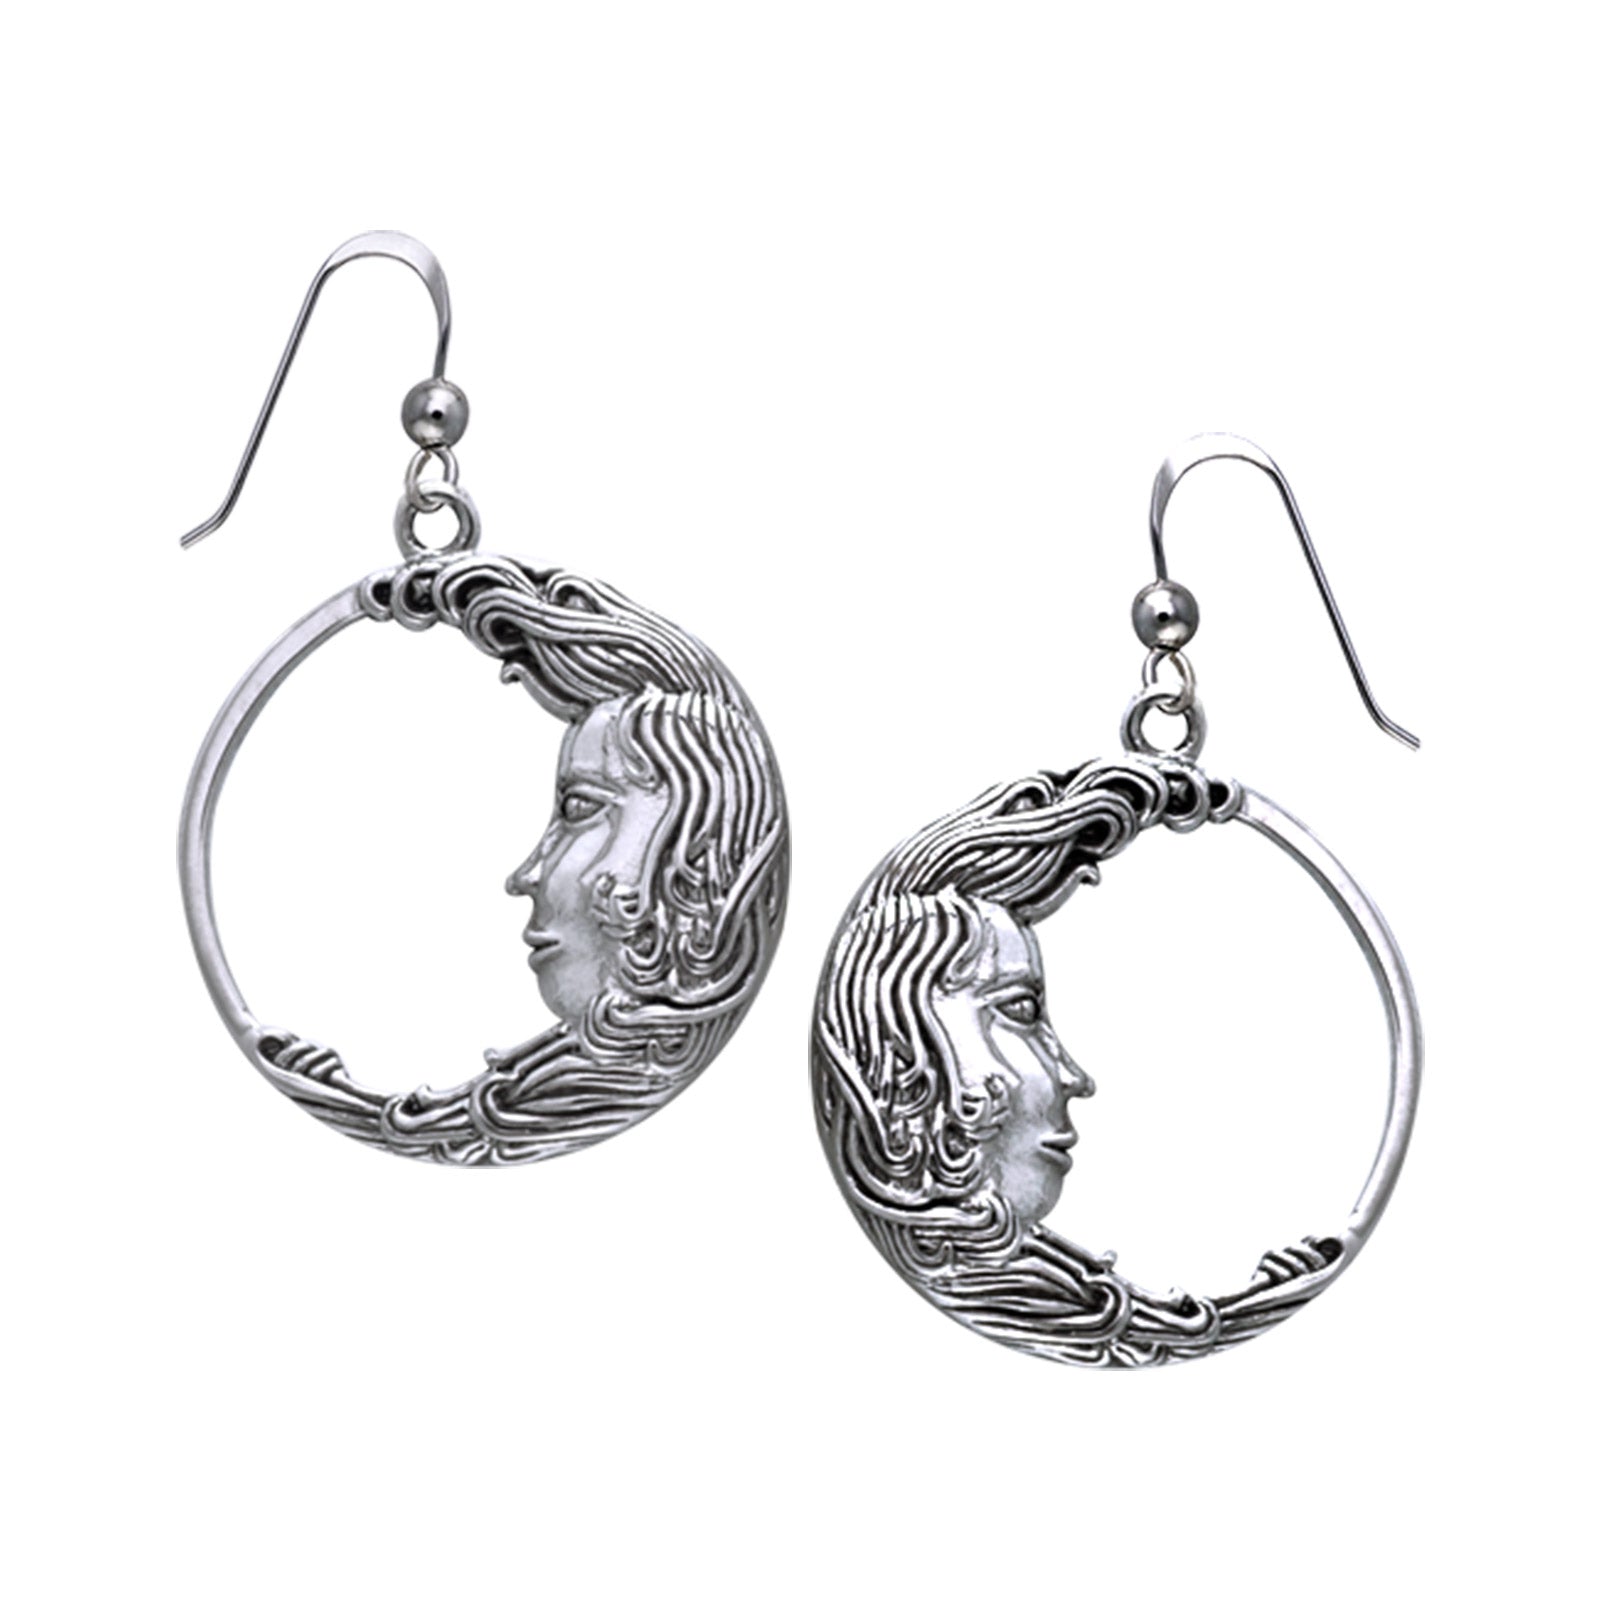 Luna the Moon Goddess Celestial Sterling Silver Hook Earrings - Silver Insanity